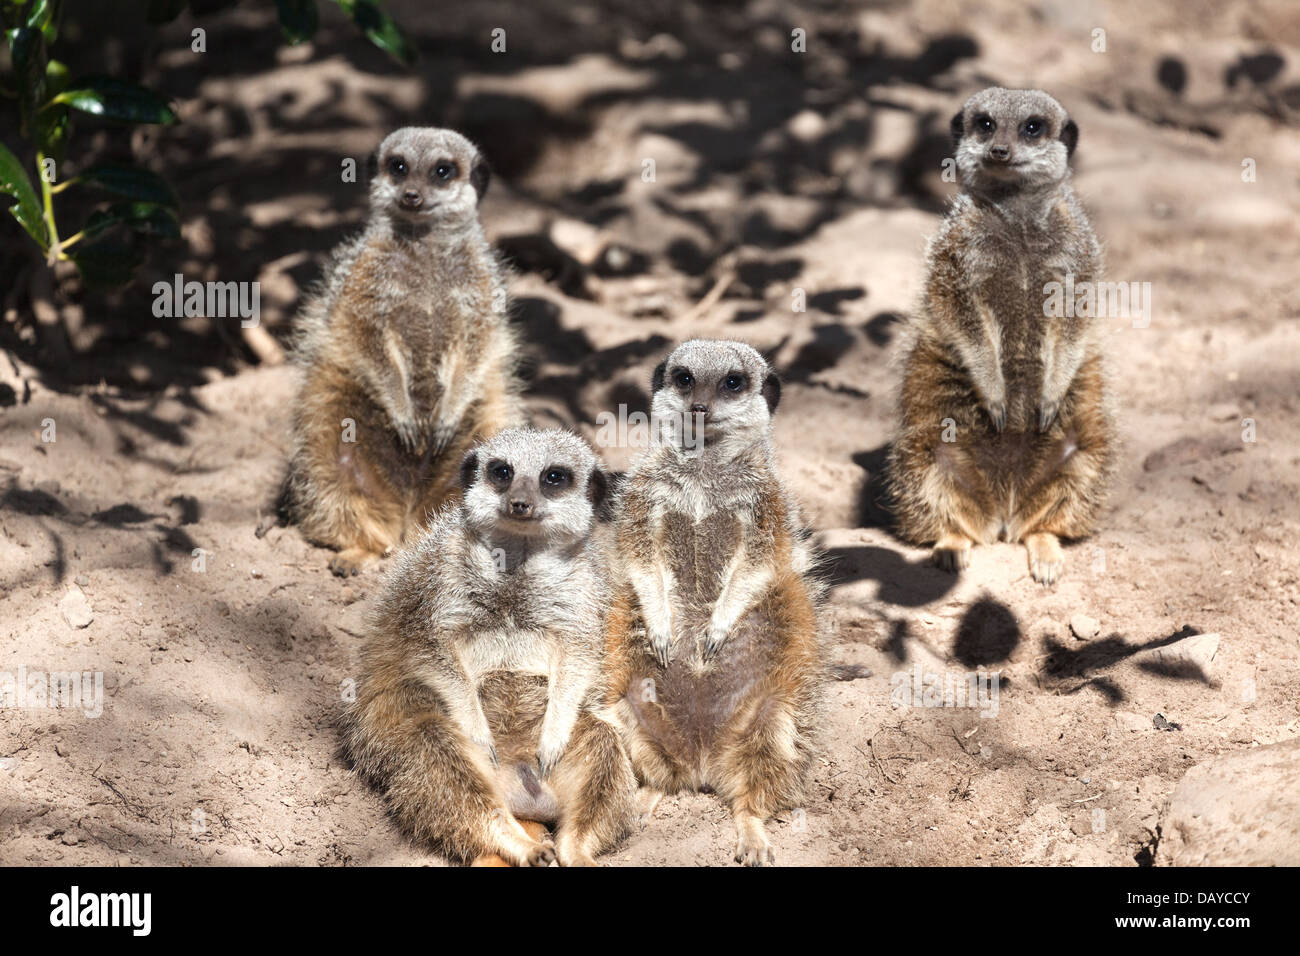 Meerkats (Suricata suricatta),small mammal belonging to the mongoose family Stock Photo